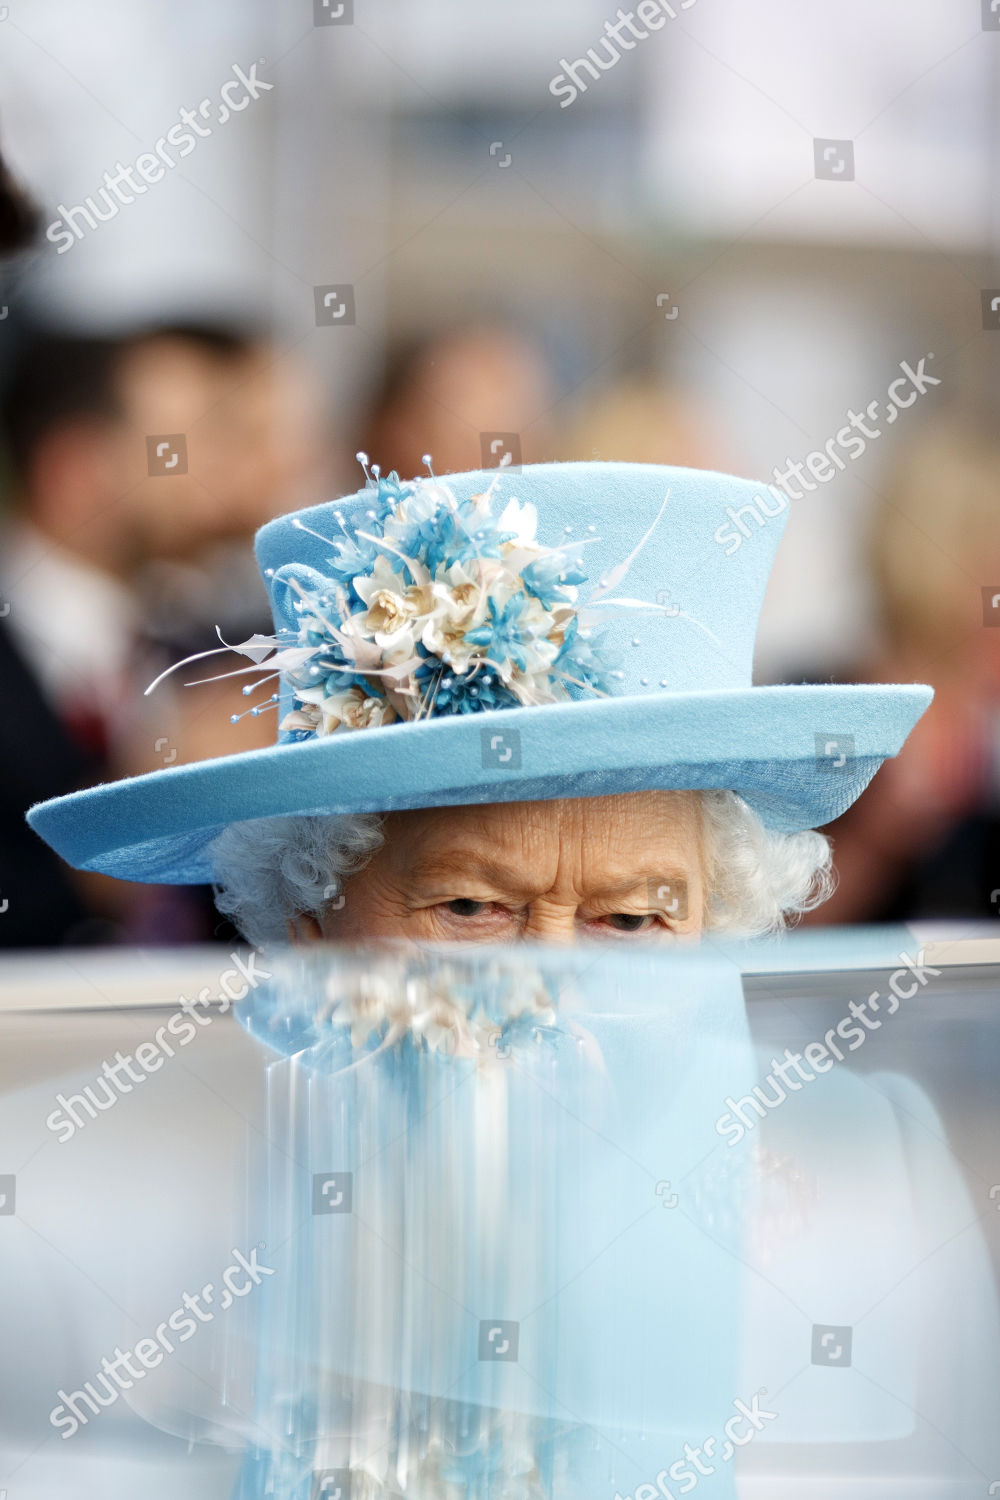 queen-elizabeth-ii-visits-british-airways-headquarters-heathrow-airport-london-uk-shutterstock-editorial-10245682f.jpg